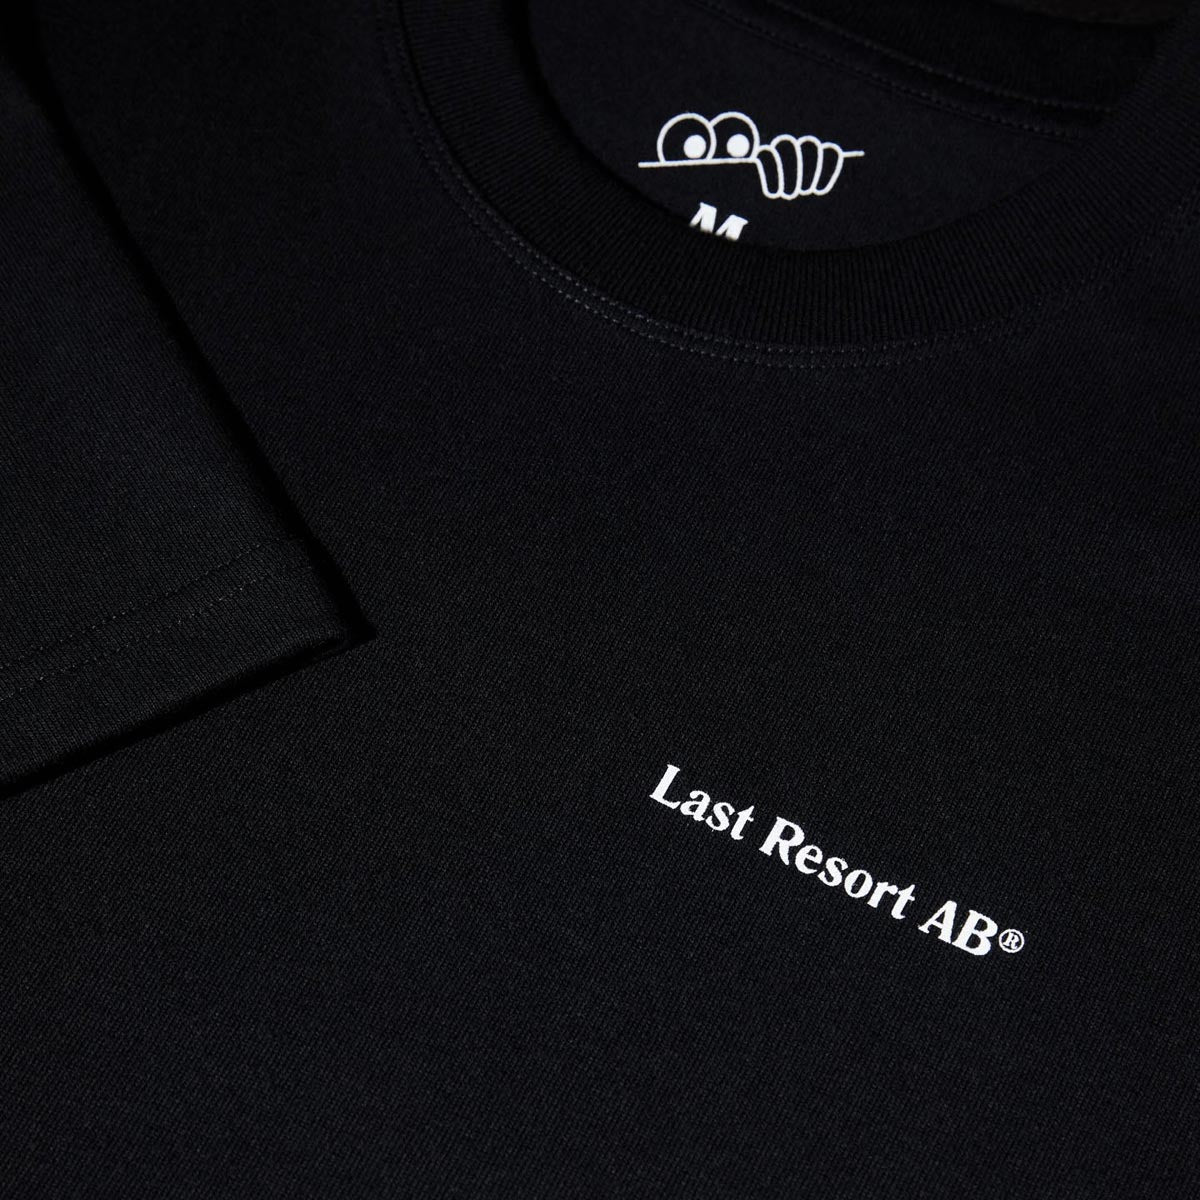 Last Resort AB 5050 T-Shirt - Black image 3